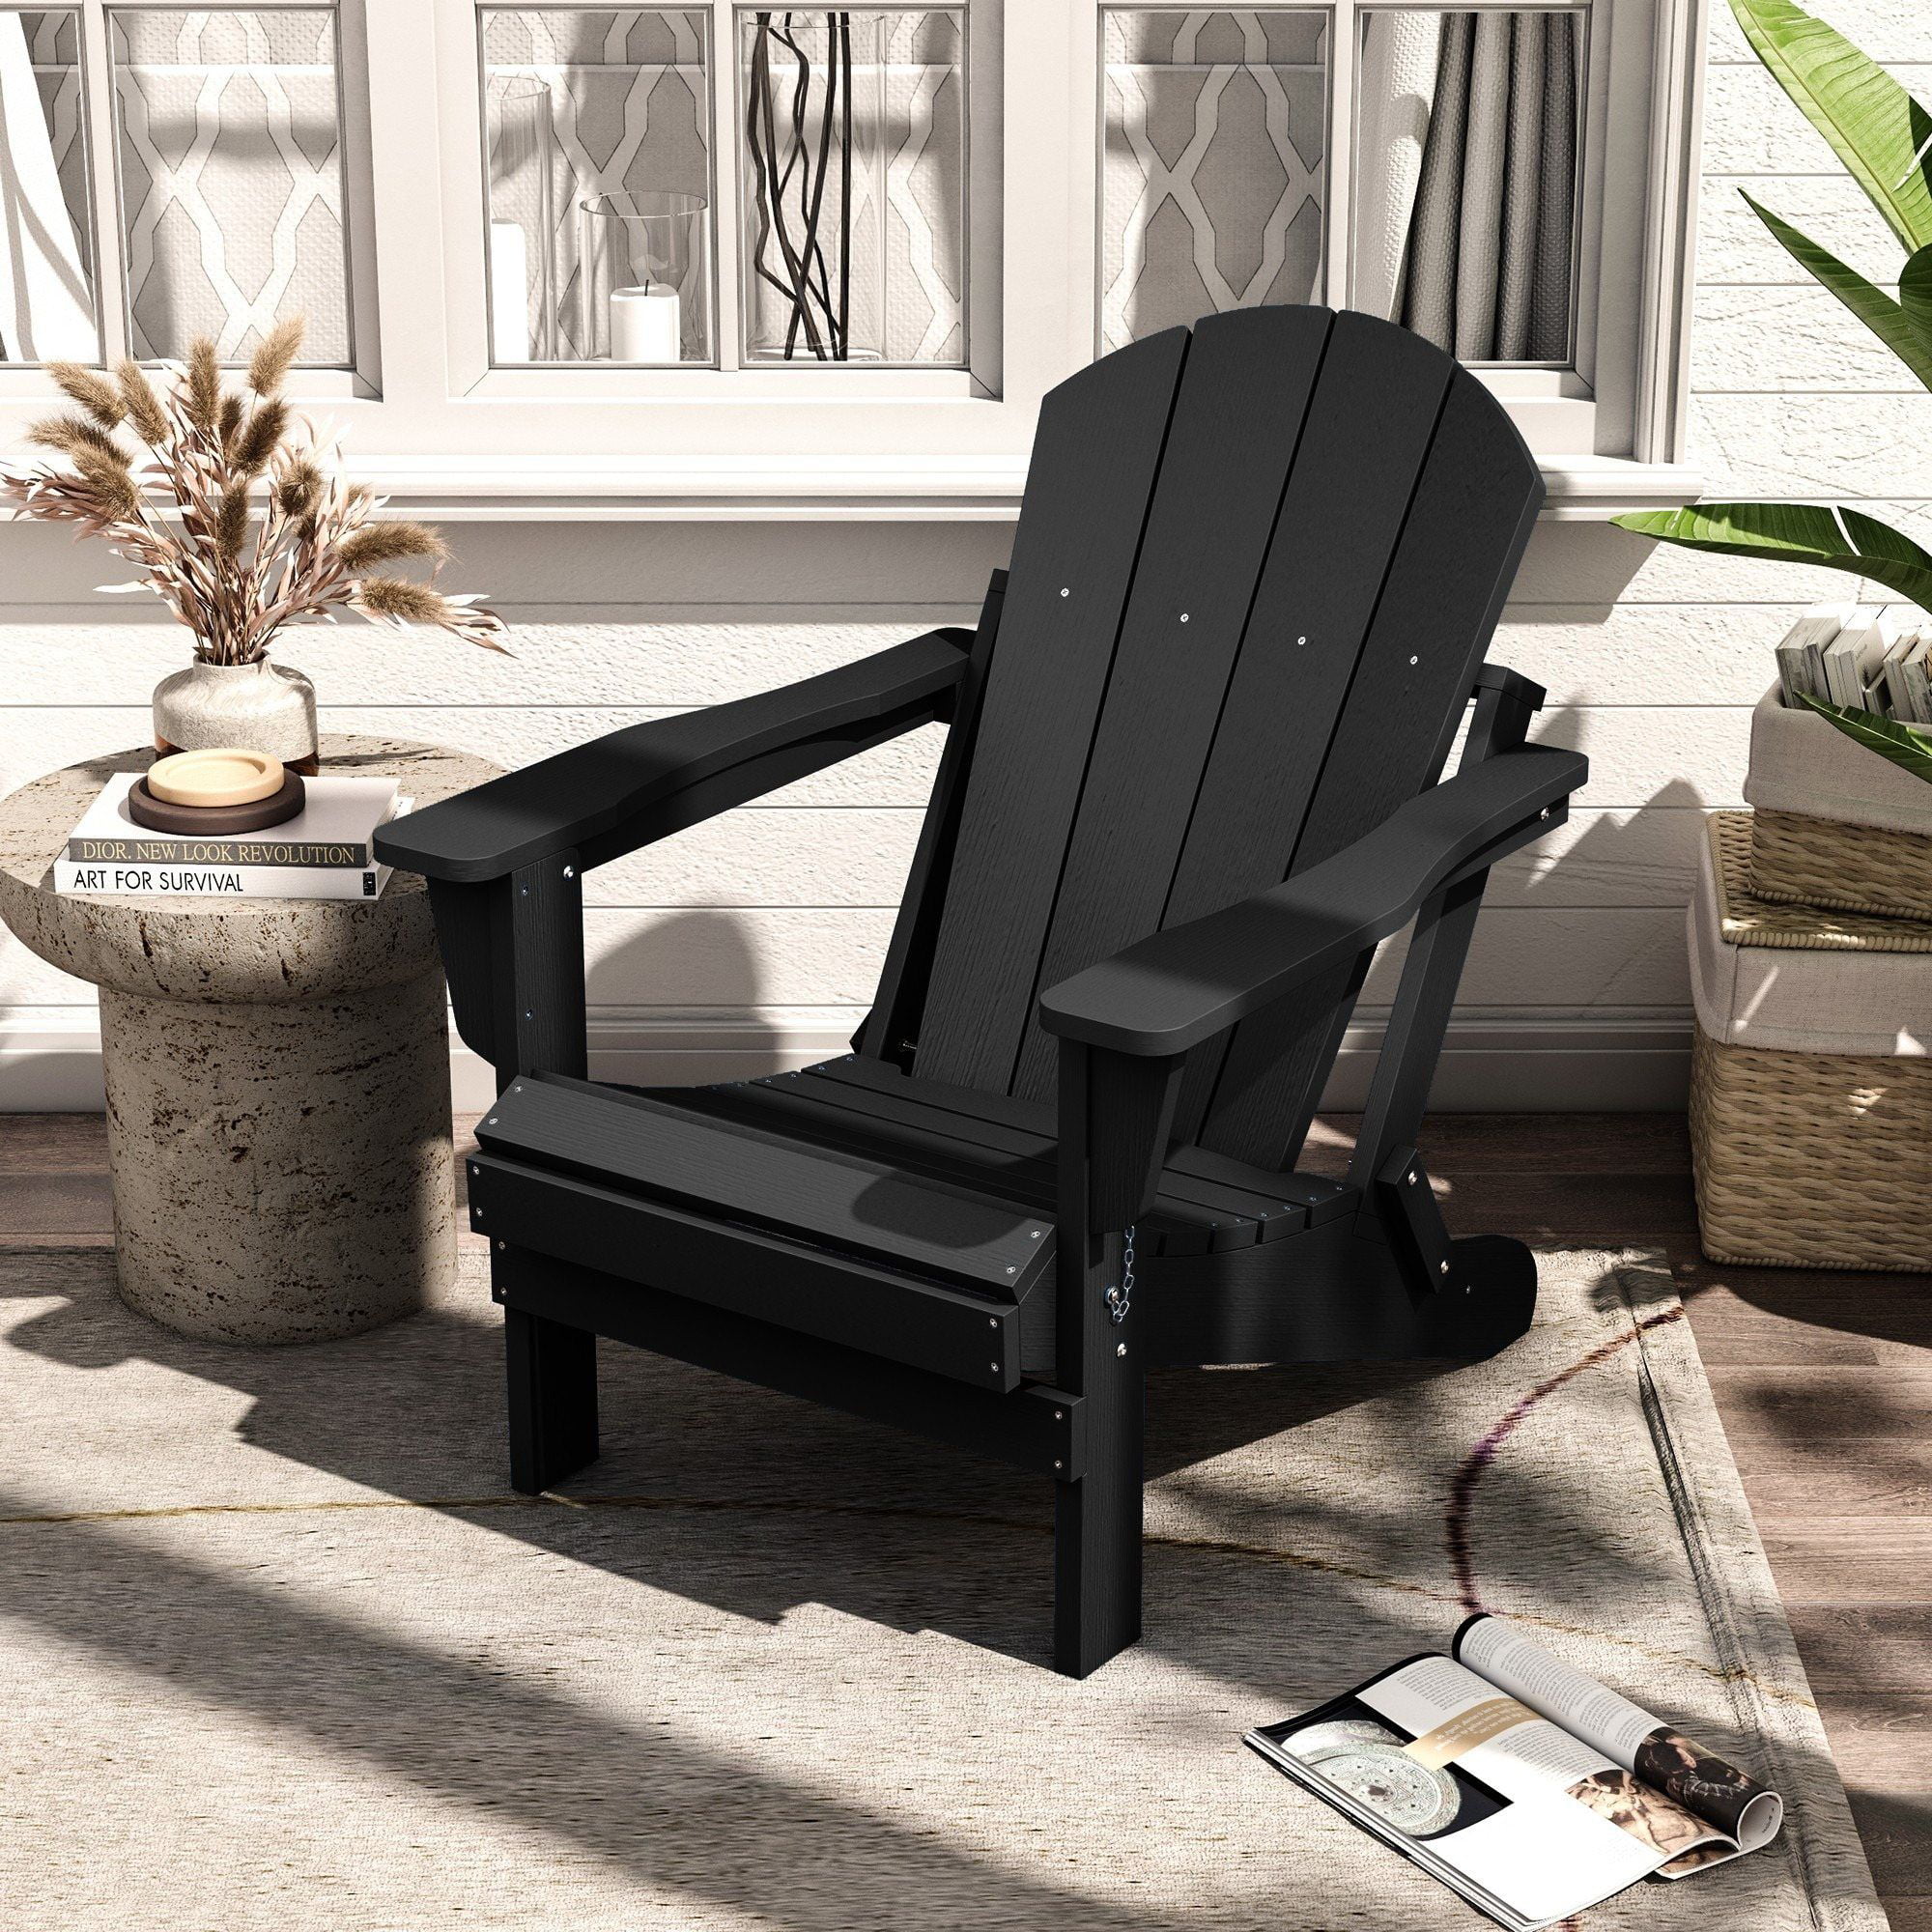 Serwall Outdoor Plastic Adirondack Chair, Black